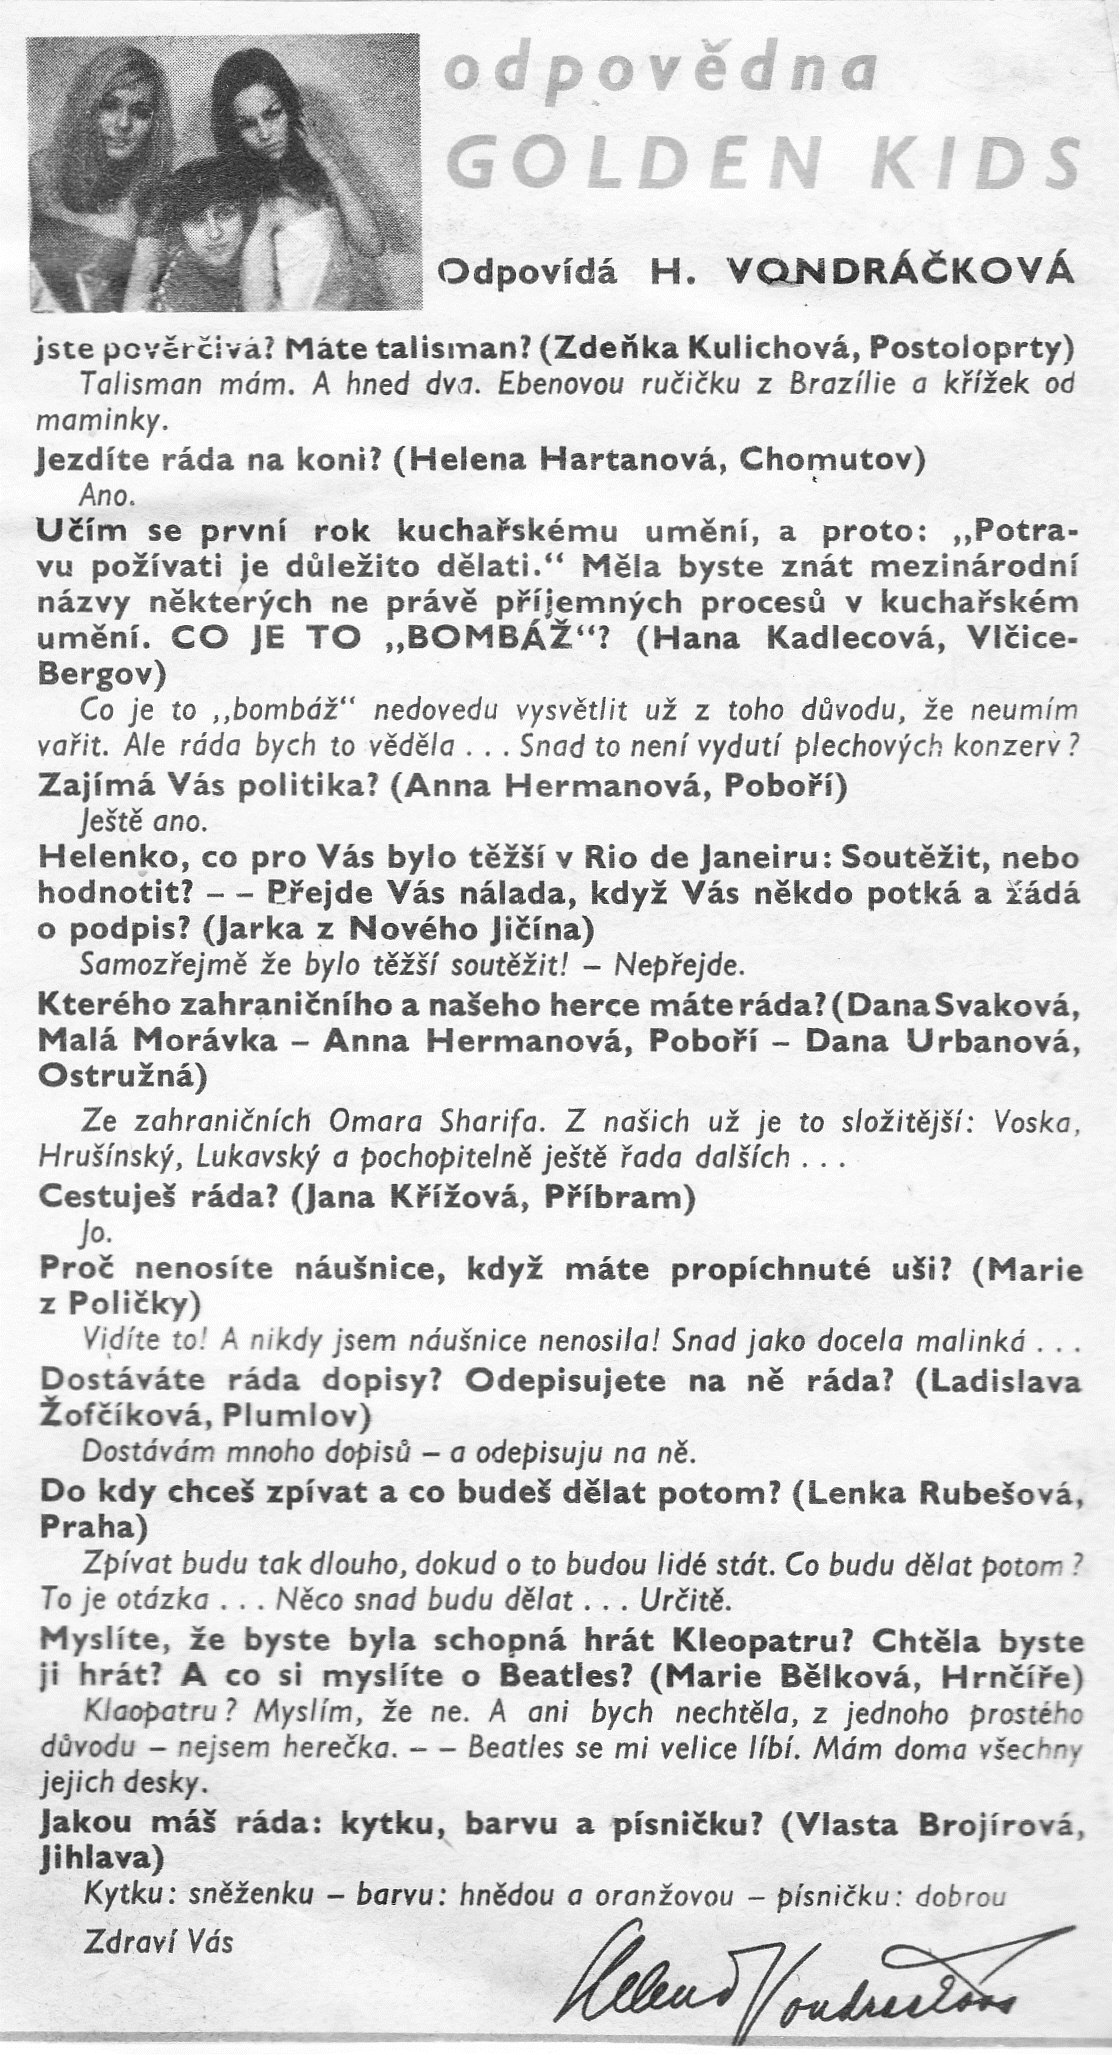 1969, Sedmička-odpovědna c.jpg